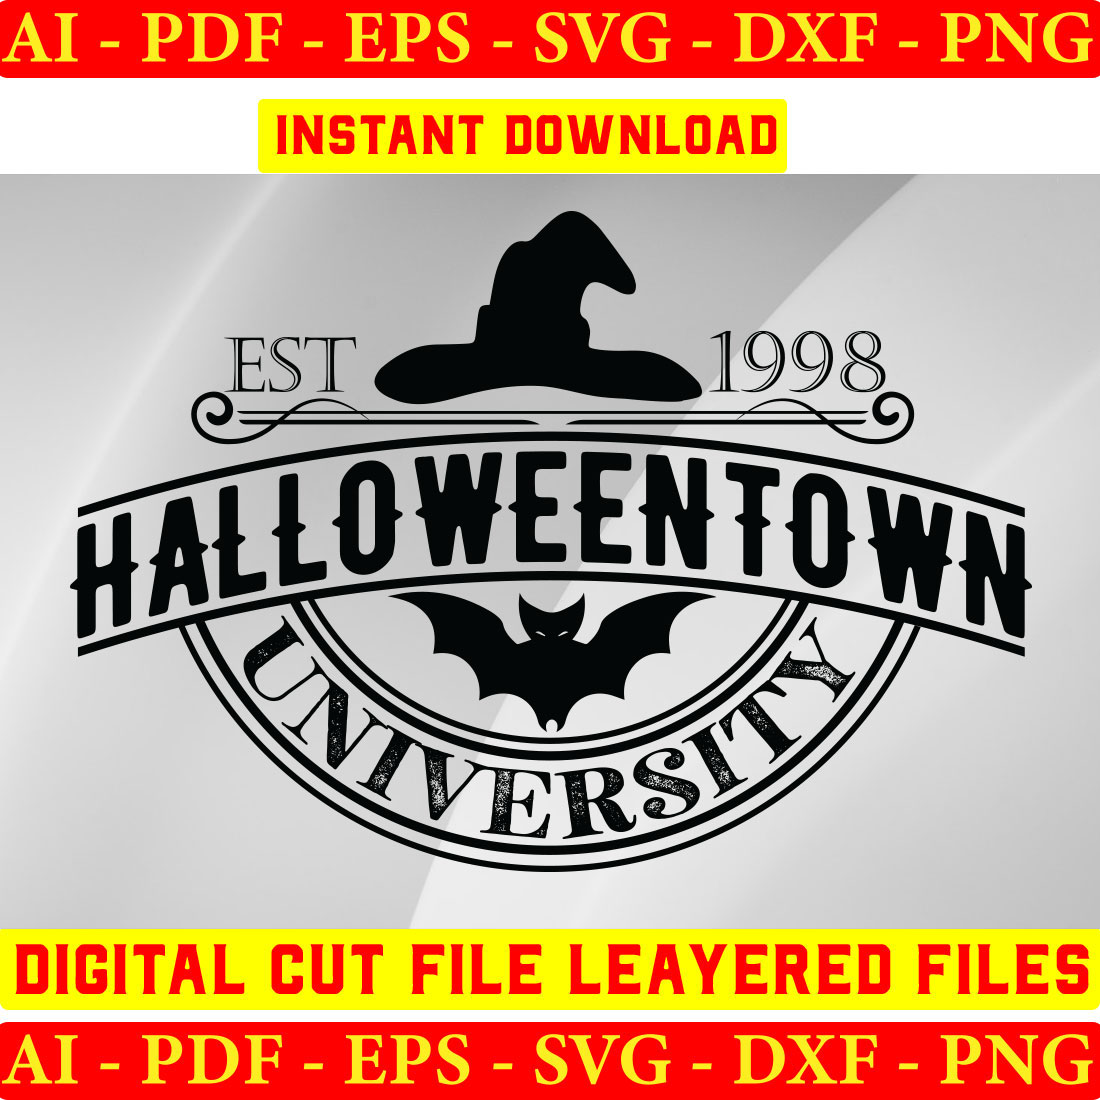 Est 1998 Halloweentown University cover image.